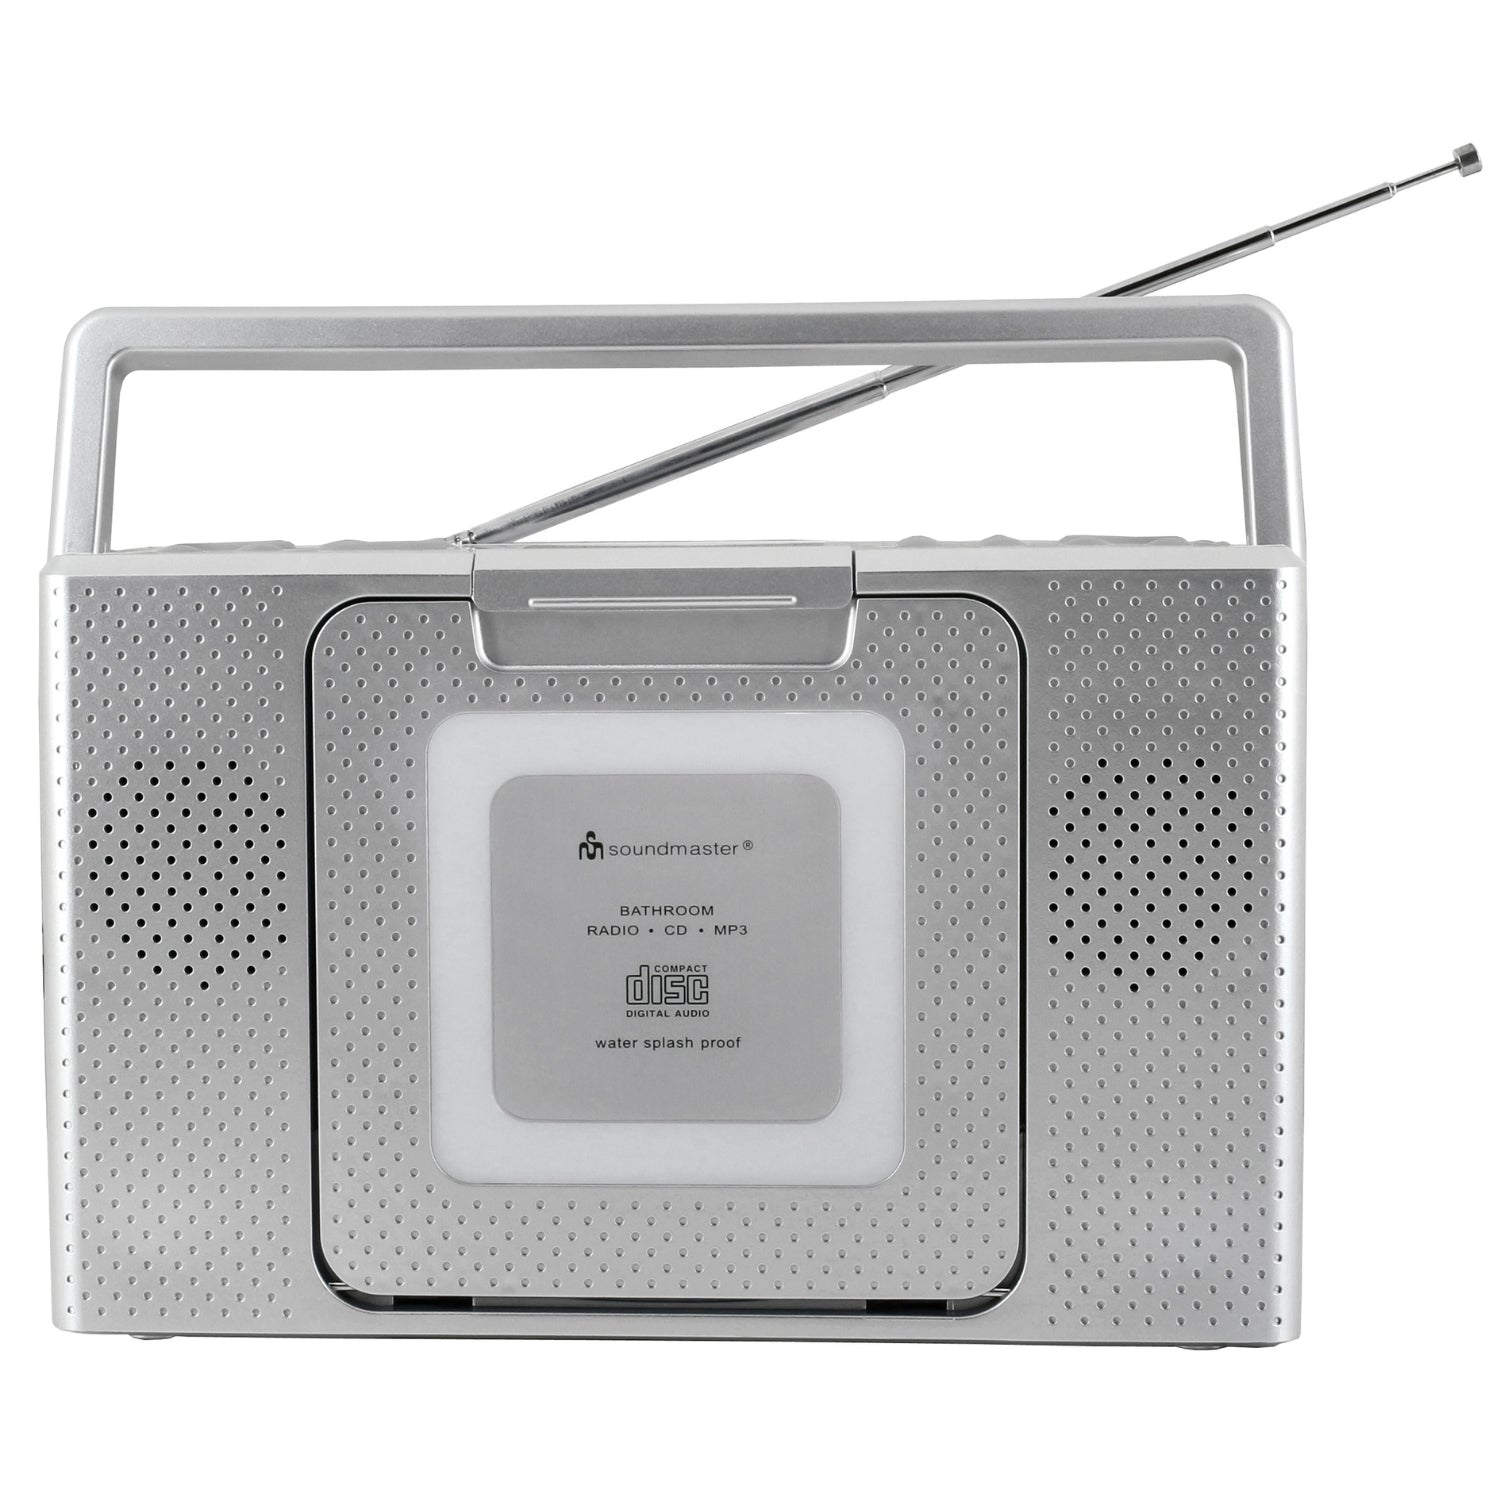 Soundmaster BCD480 bathroom radio kitchen radio CD player clock IPX4 splash-proof